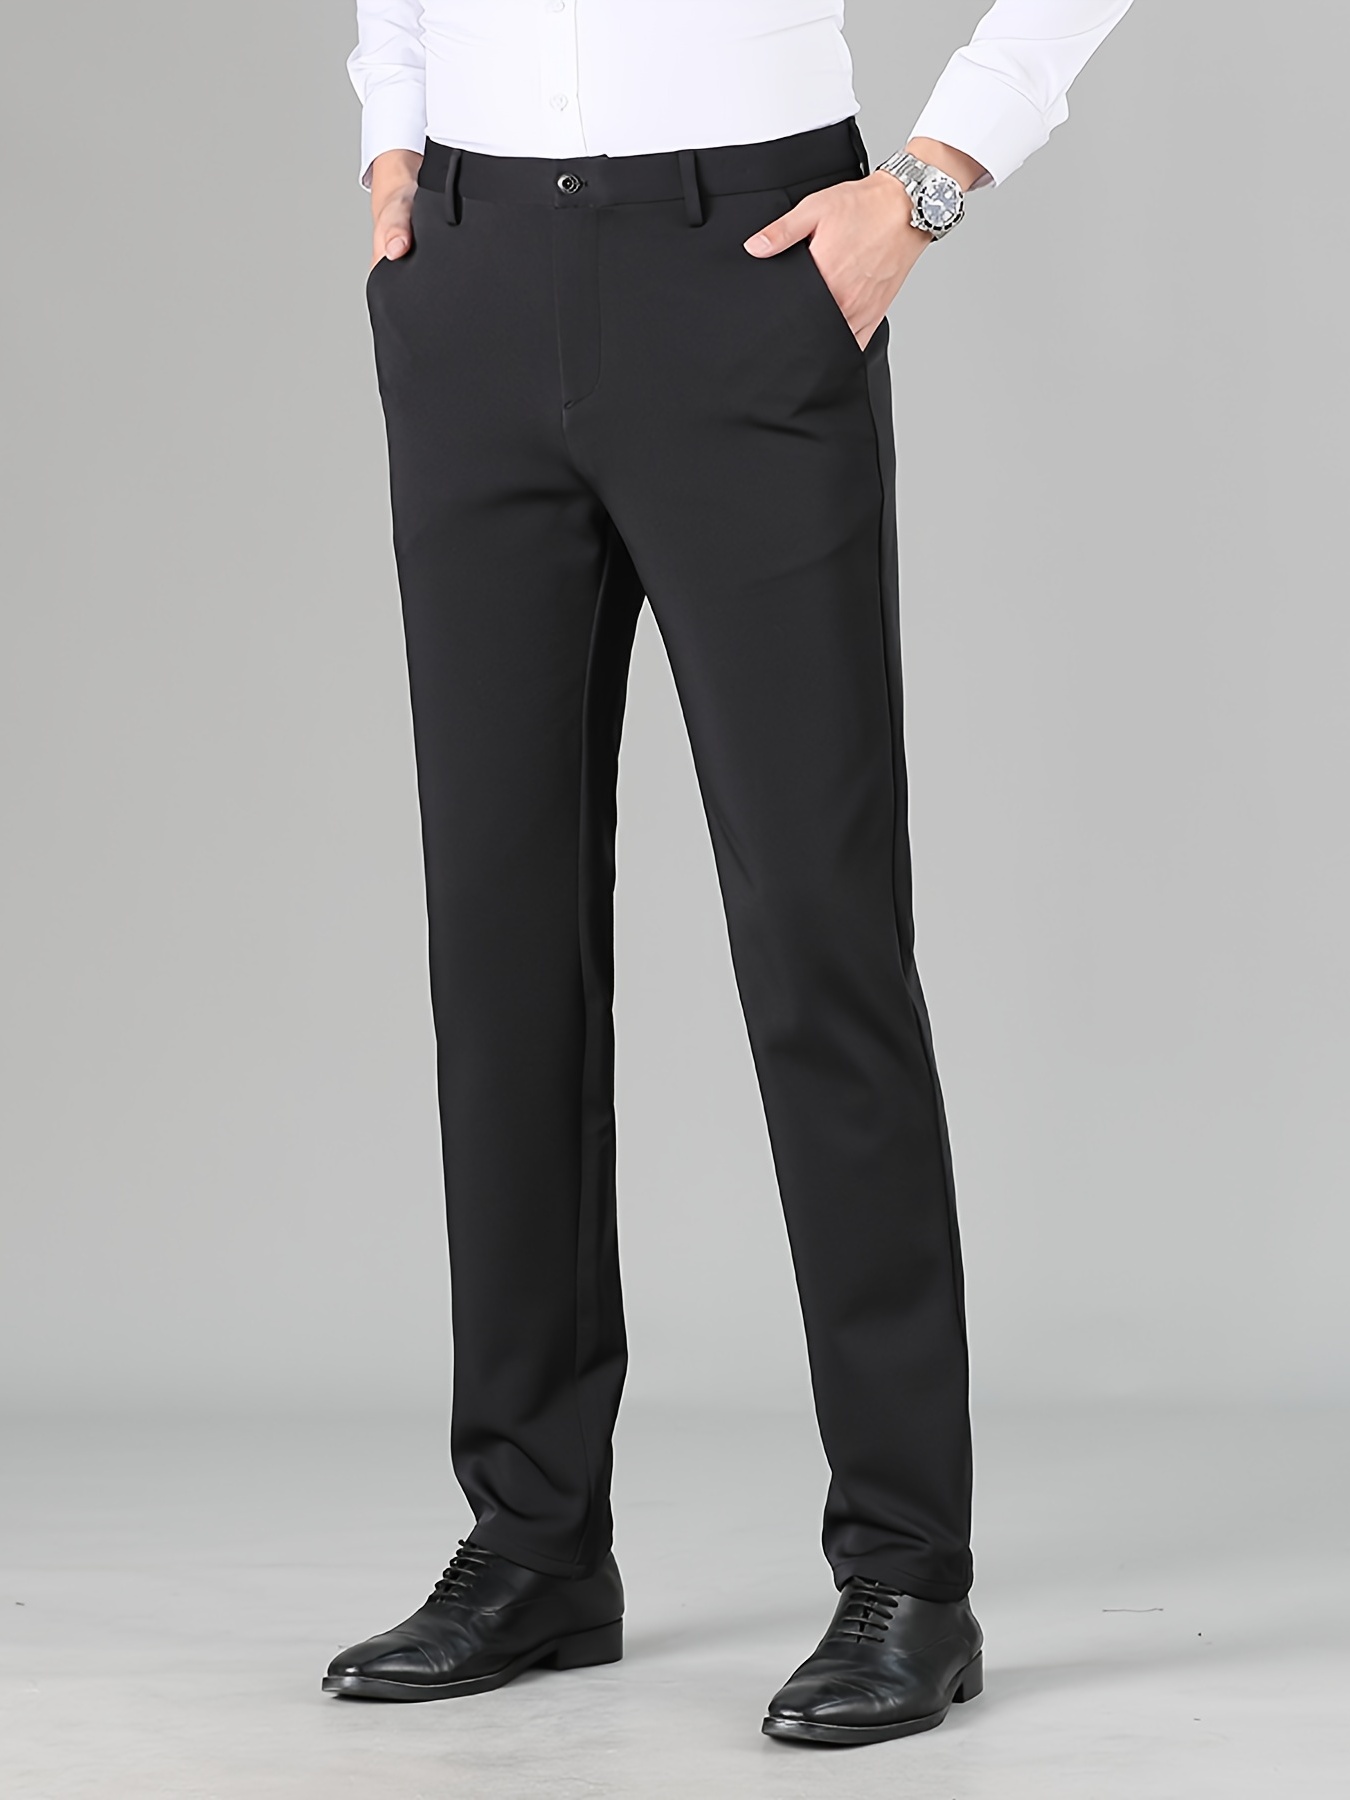 Express Extra Slim Innovator Black Suit Pant, $98 Express, 54% OFF